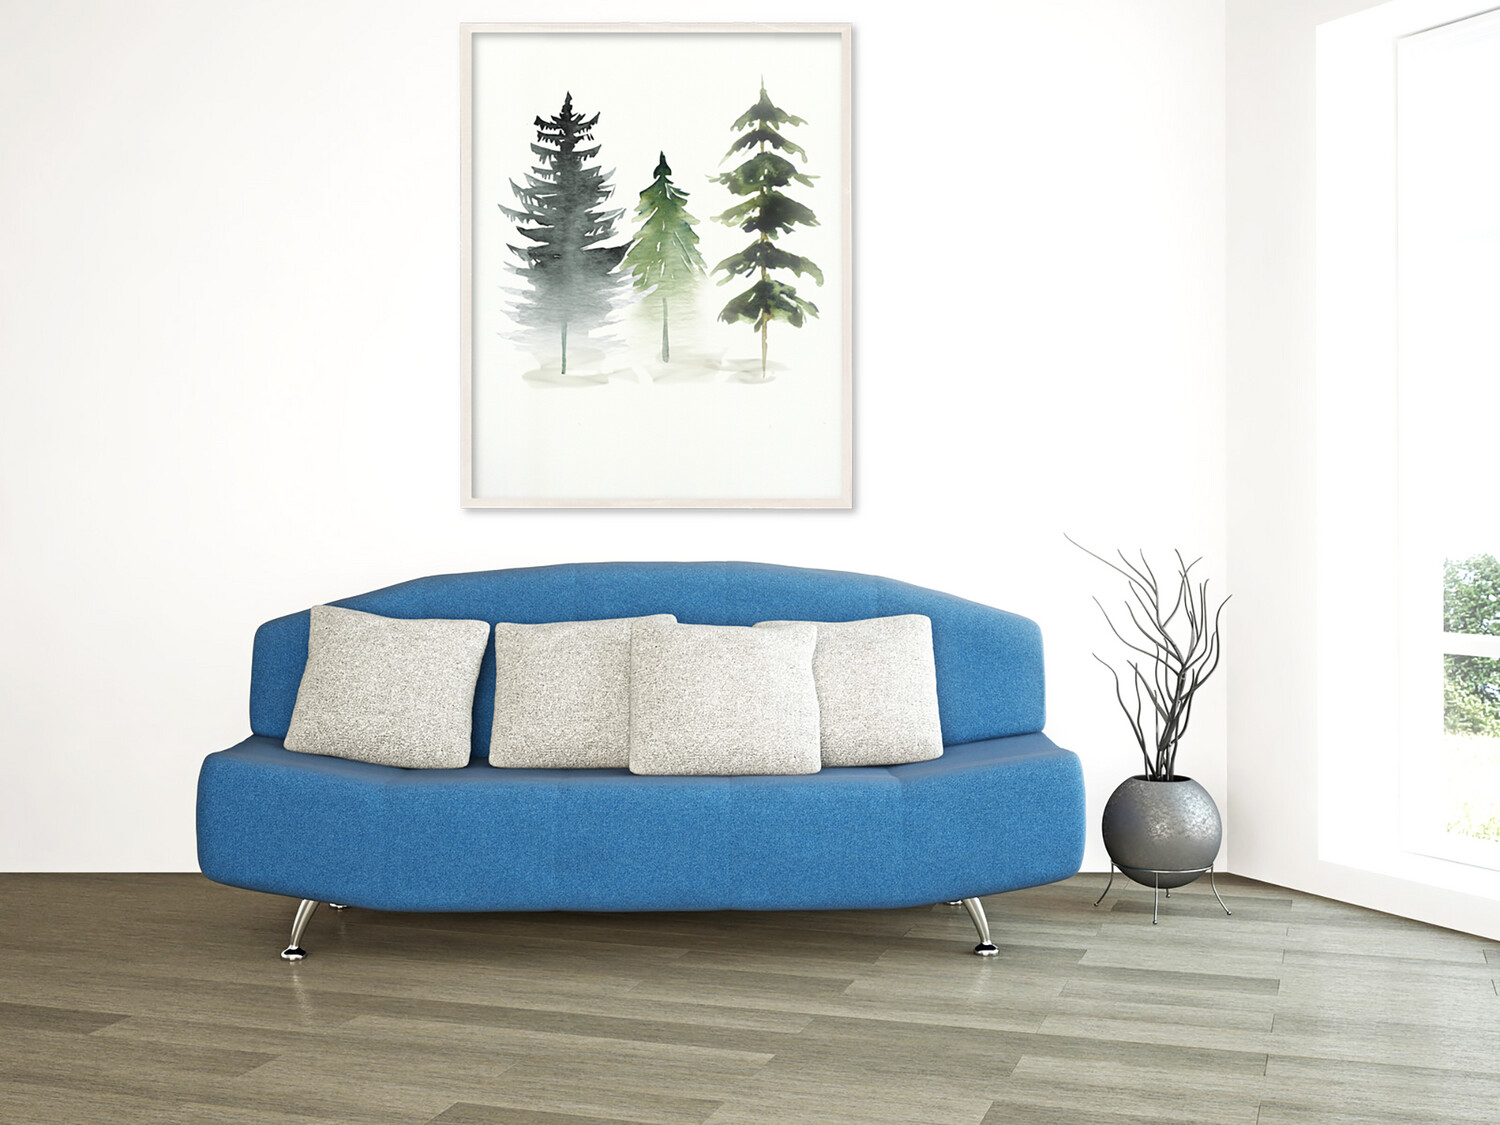 3 Winter Trees Watercolor / Wall Print / Digital Artwork / Wall Art / INSTANT DOWNLOAD / Winter Art / Farmhouse Art